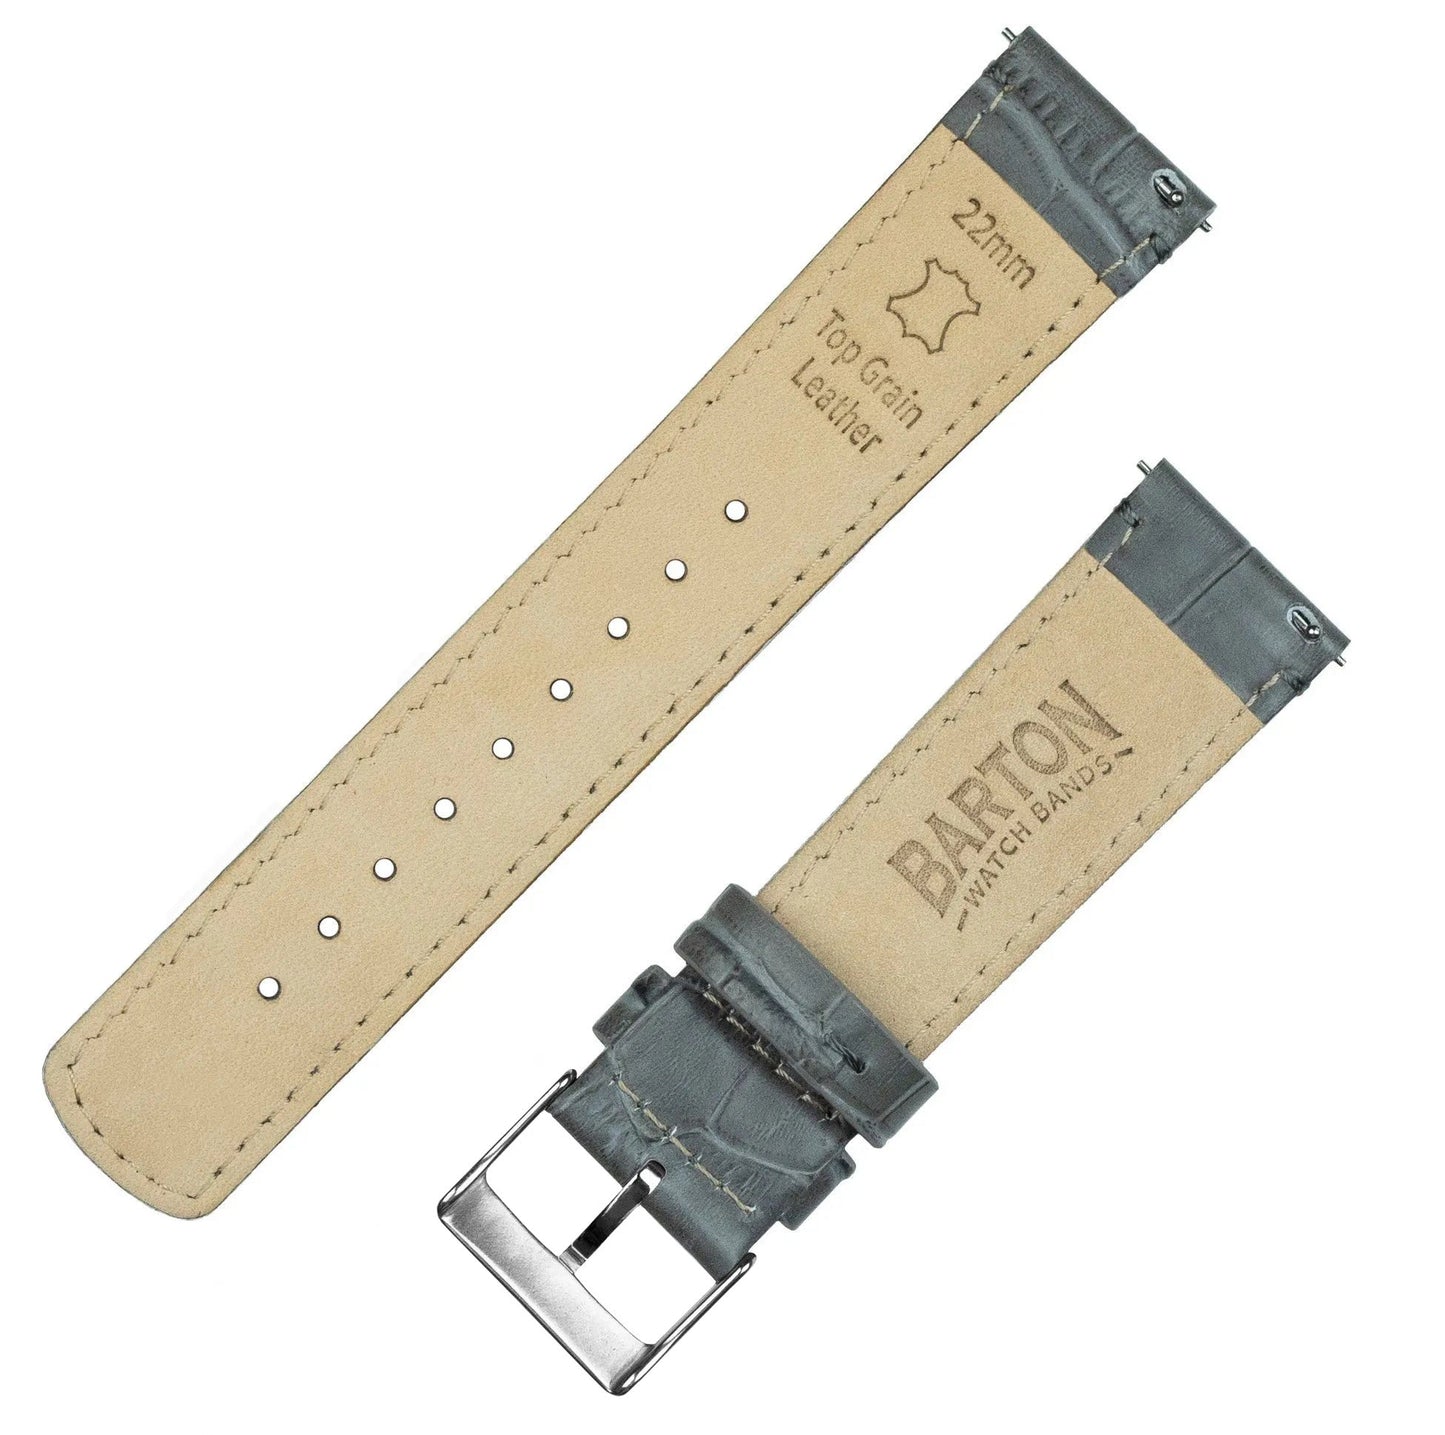 Samsung Galaxy Watch5 | Smoke Grey Alligator Grain Leather - Barton Watch Bands